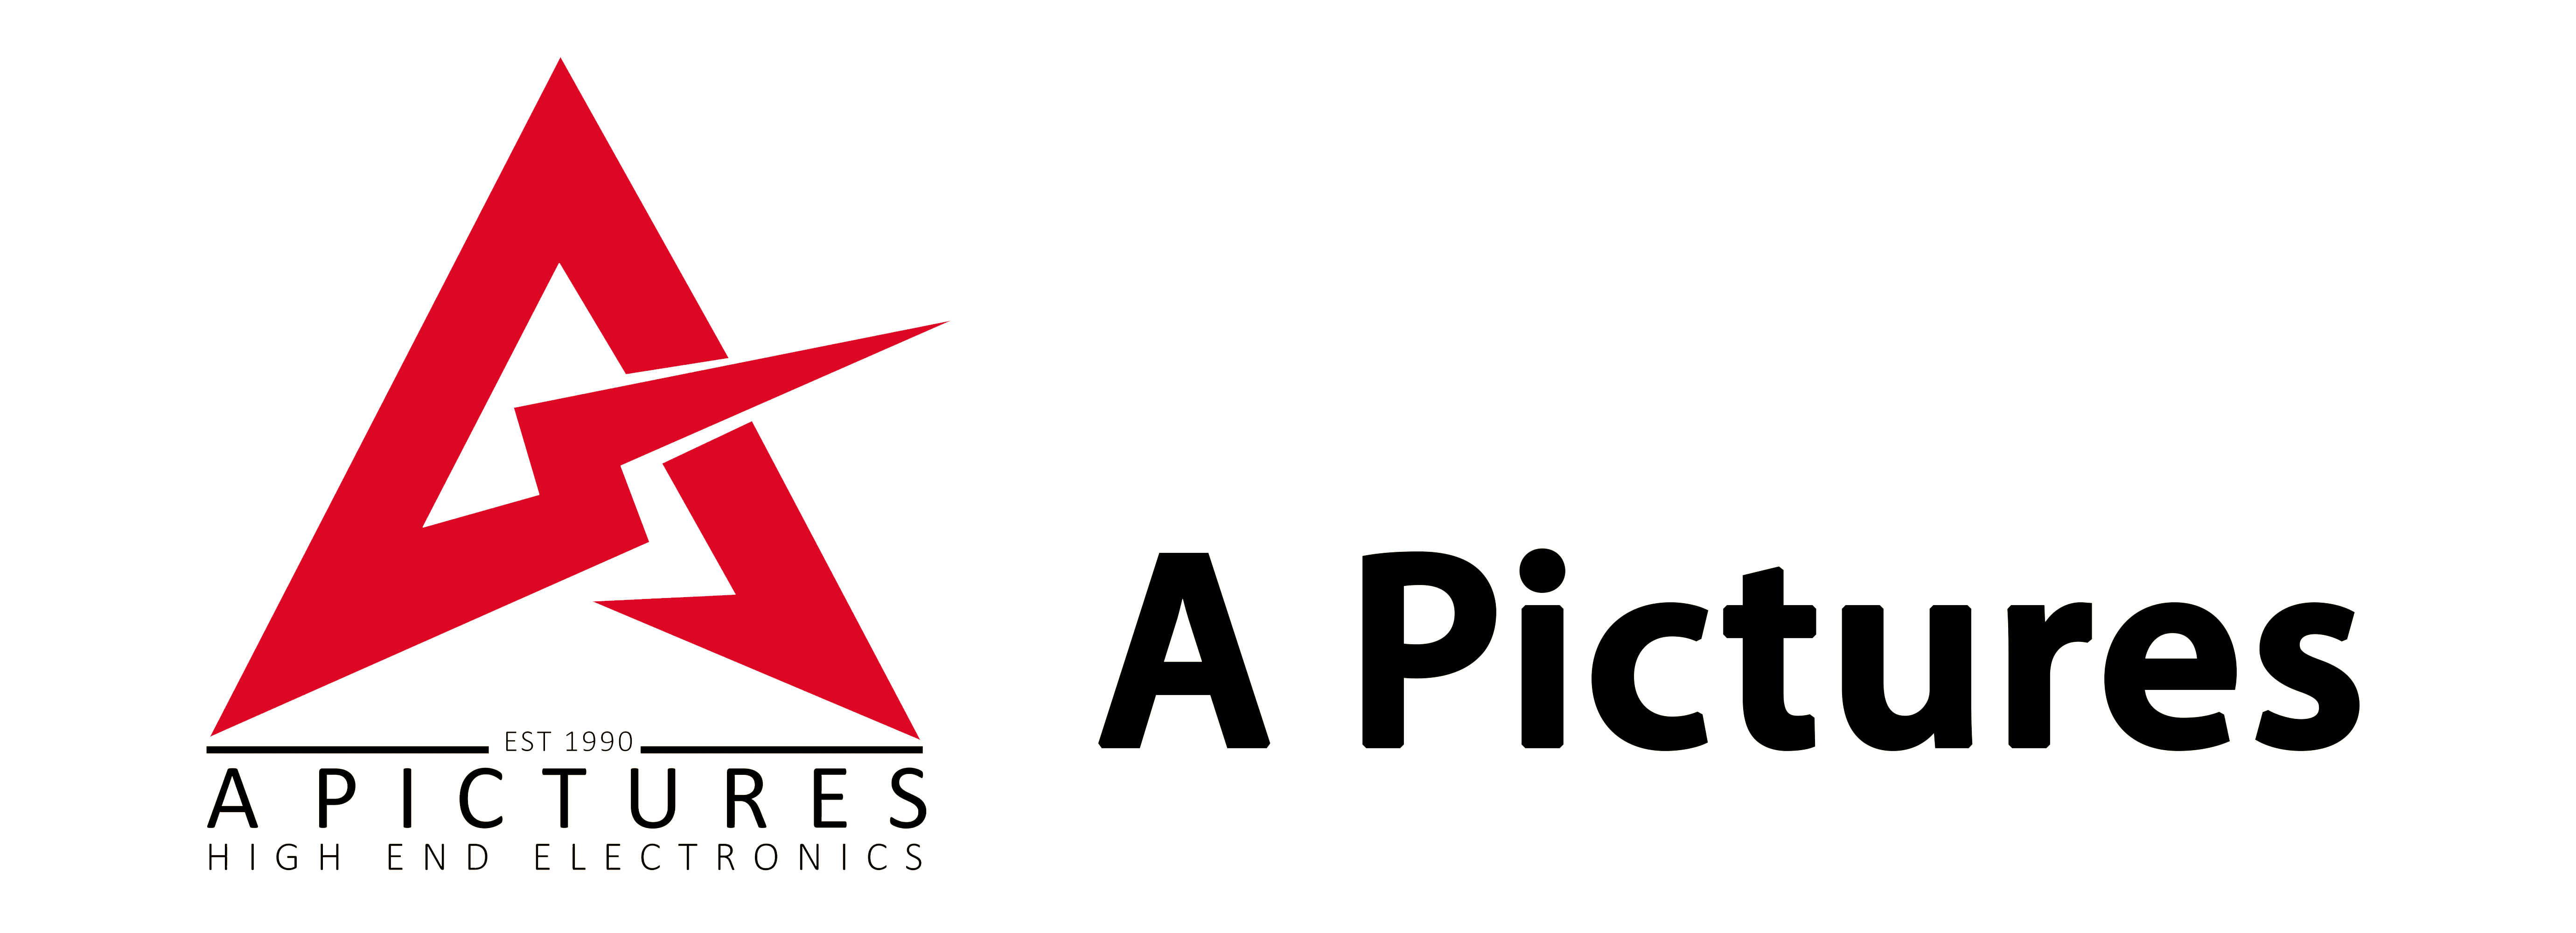 Apictures Logo